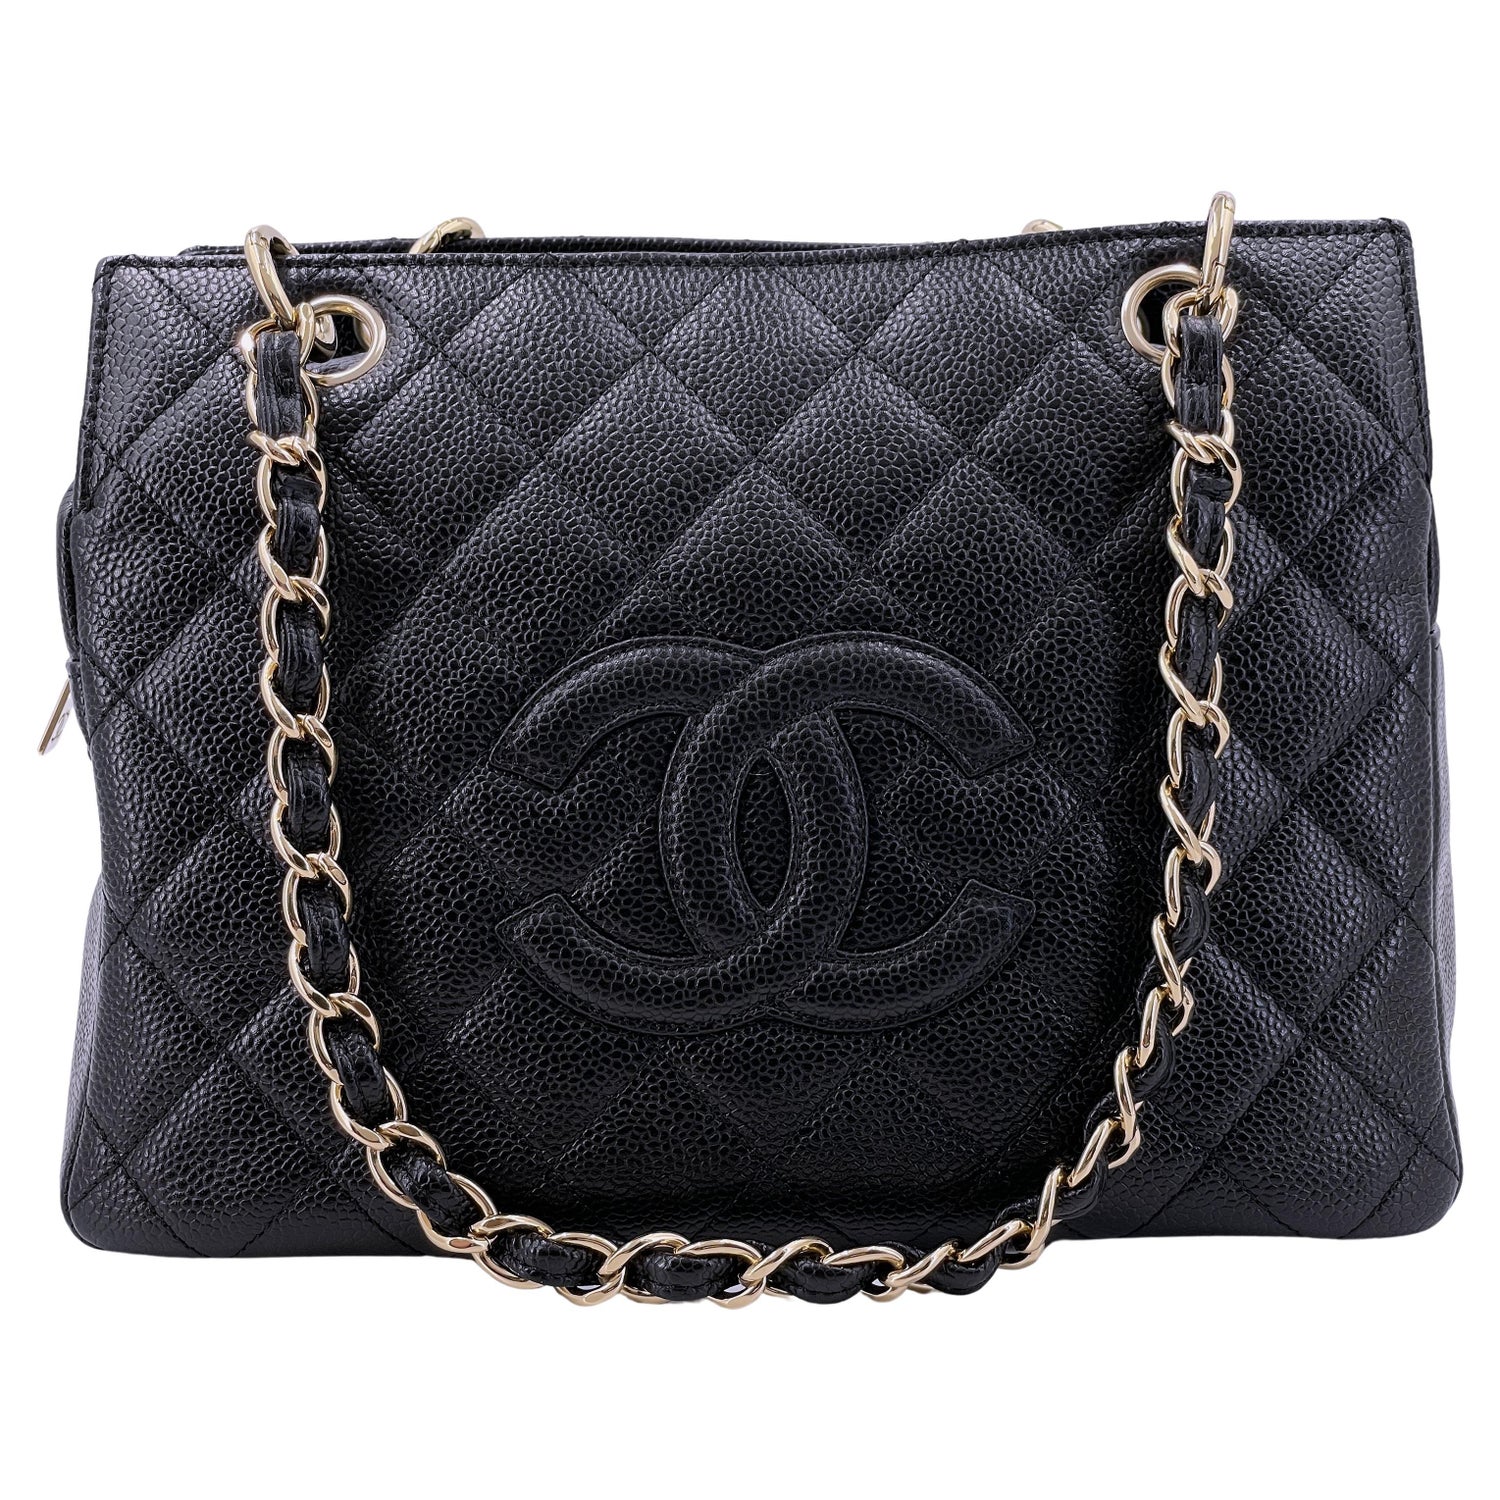 Chanel Black Caviar Timeless Classic Grand Shopper Tote Bag